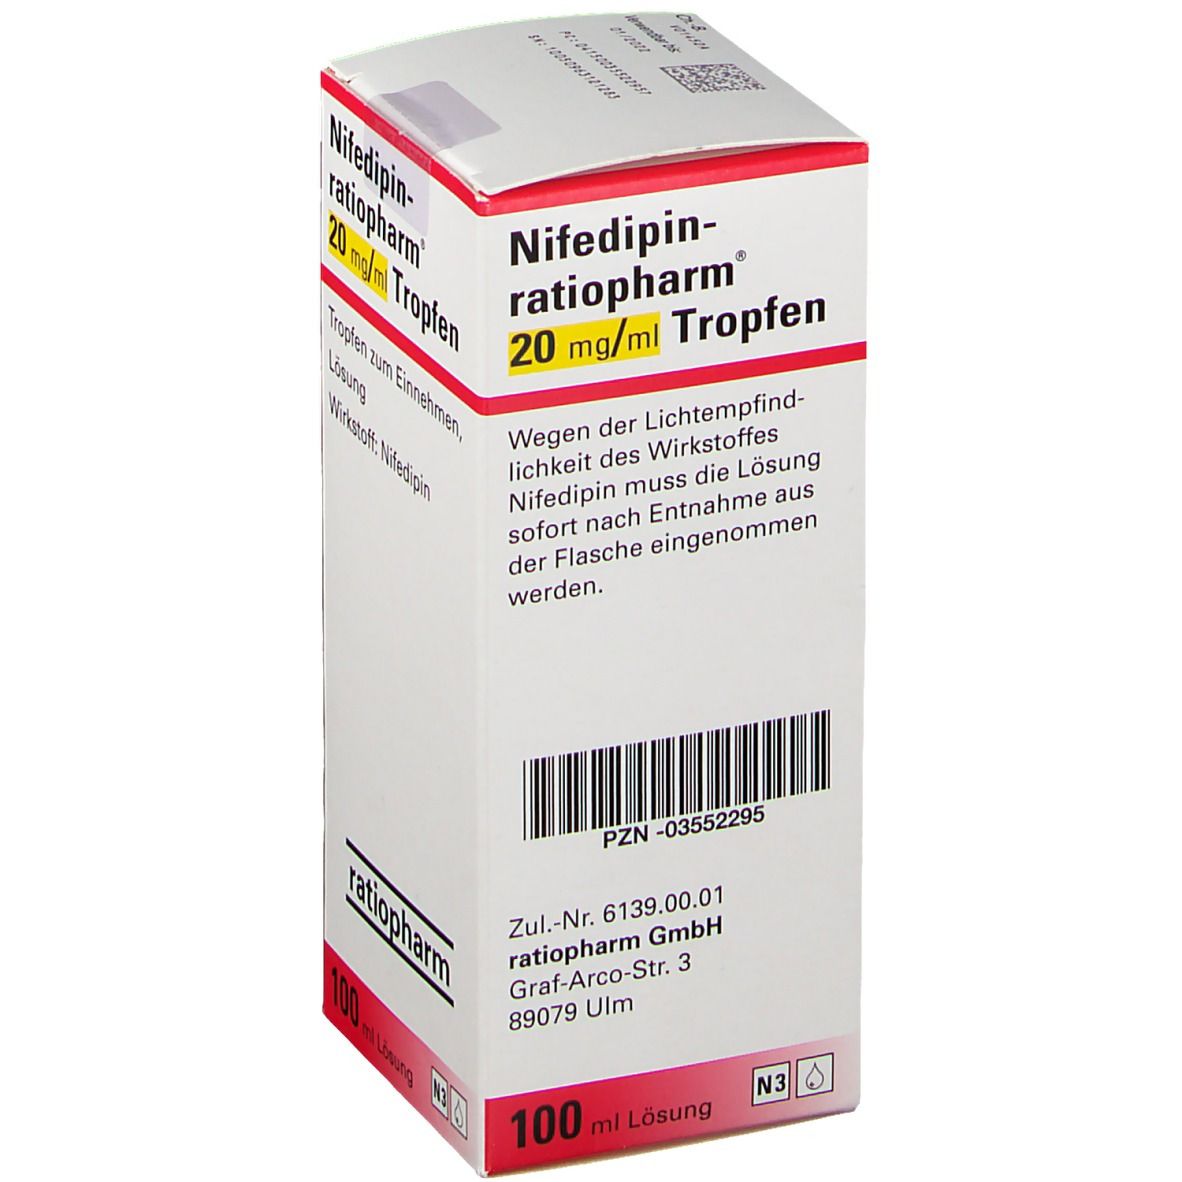 Nifedipin-ratiopharm® 20 mg/ml Tropfen